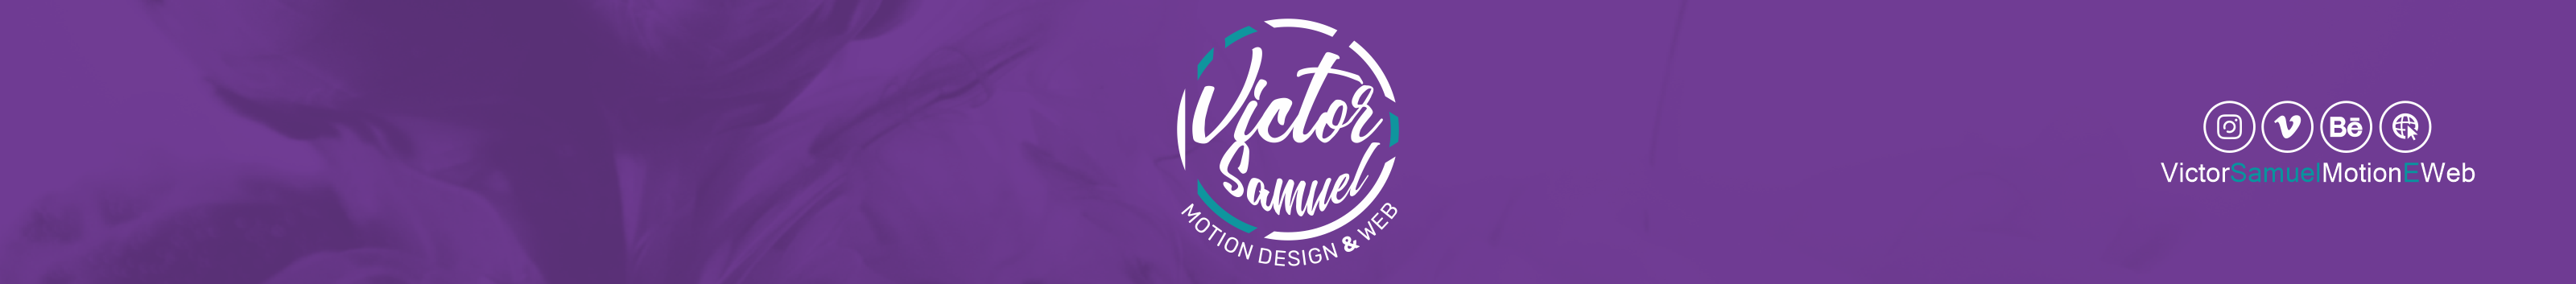 Victor Samuel Silva's profile banner